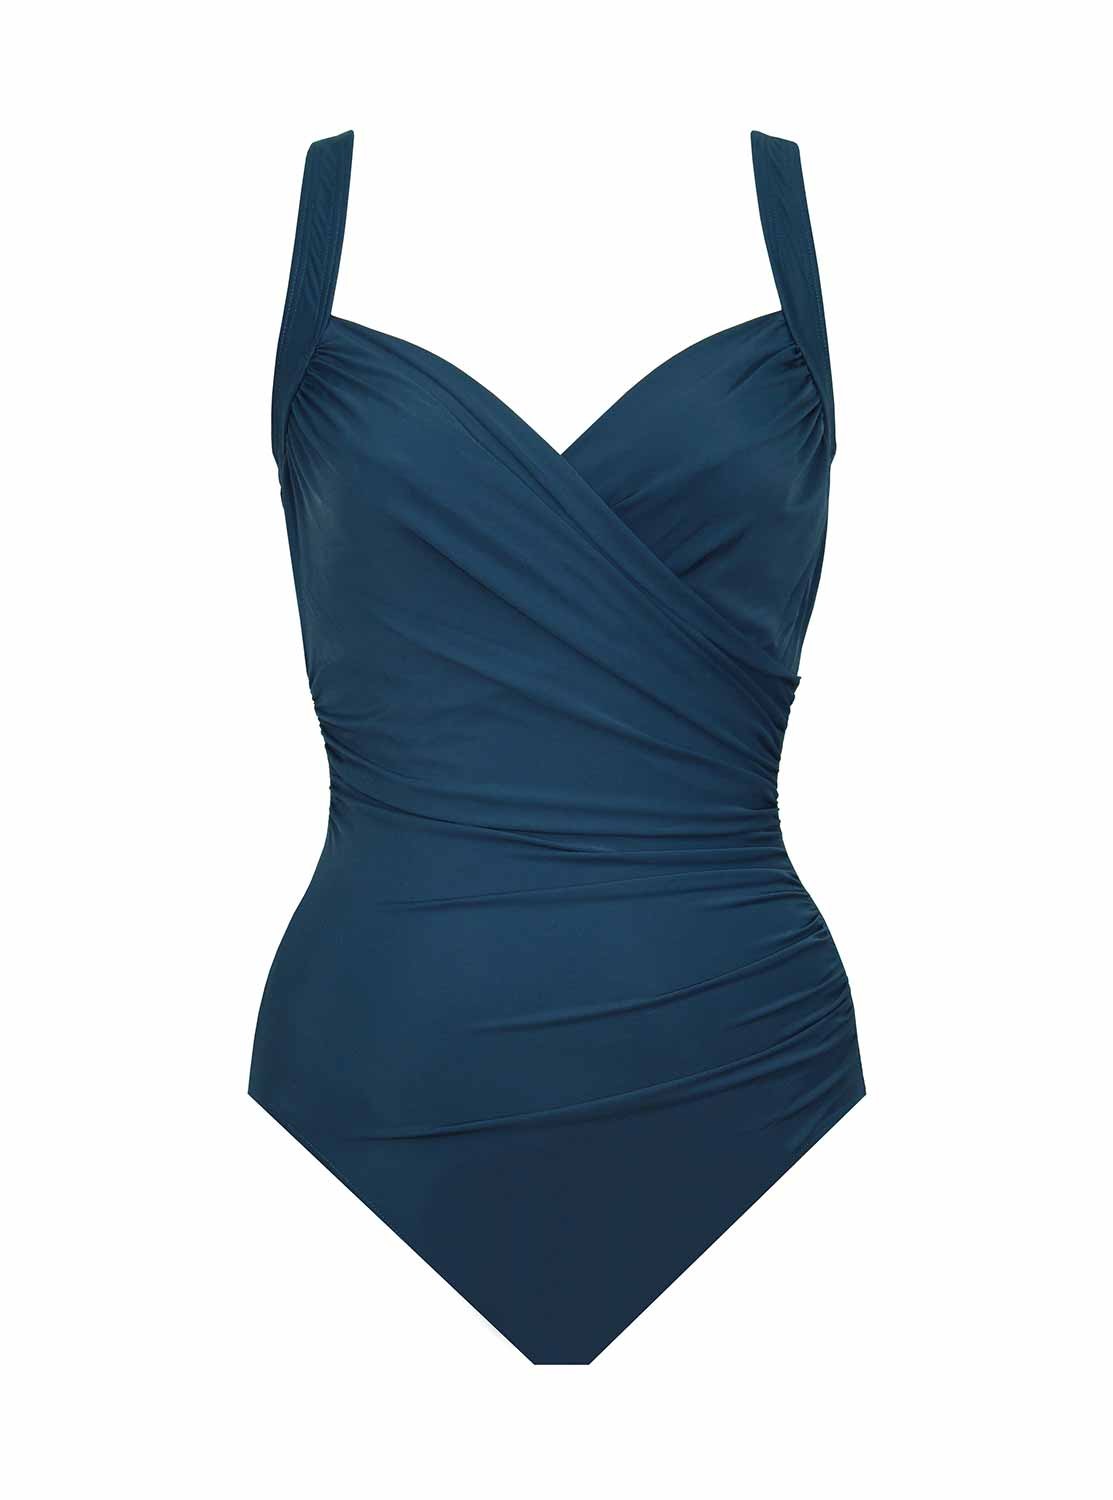 Maillot de bain gainant Sanibel Bleu Turquoise - Must Haves - M -  Miraclesuit swimwear